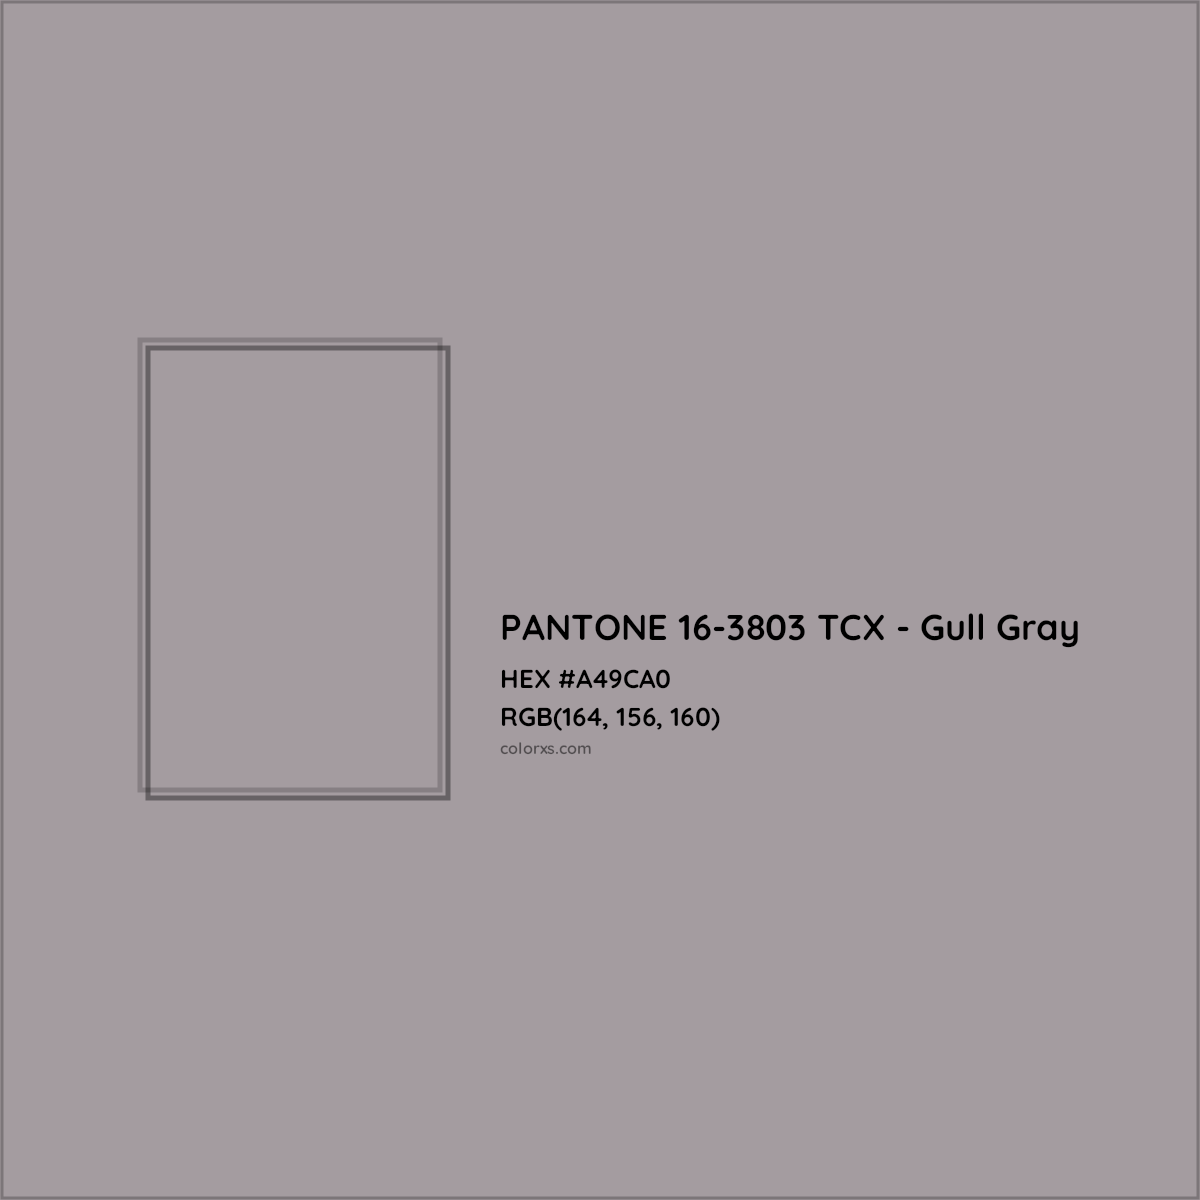 HEX #A49CA0 PANTONE 16-3803 TCX - Gull Gray CMS Pantone TCX - Color Code